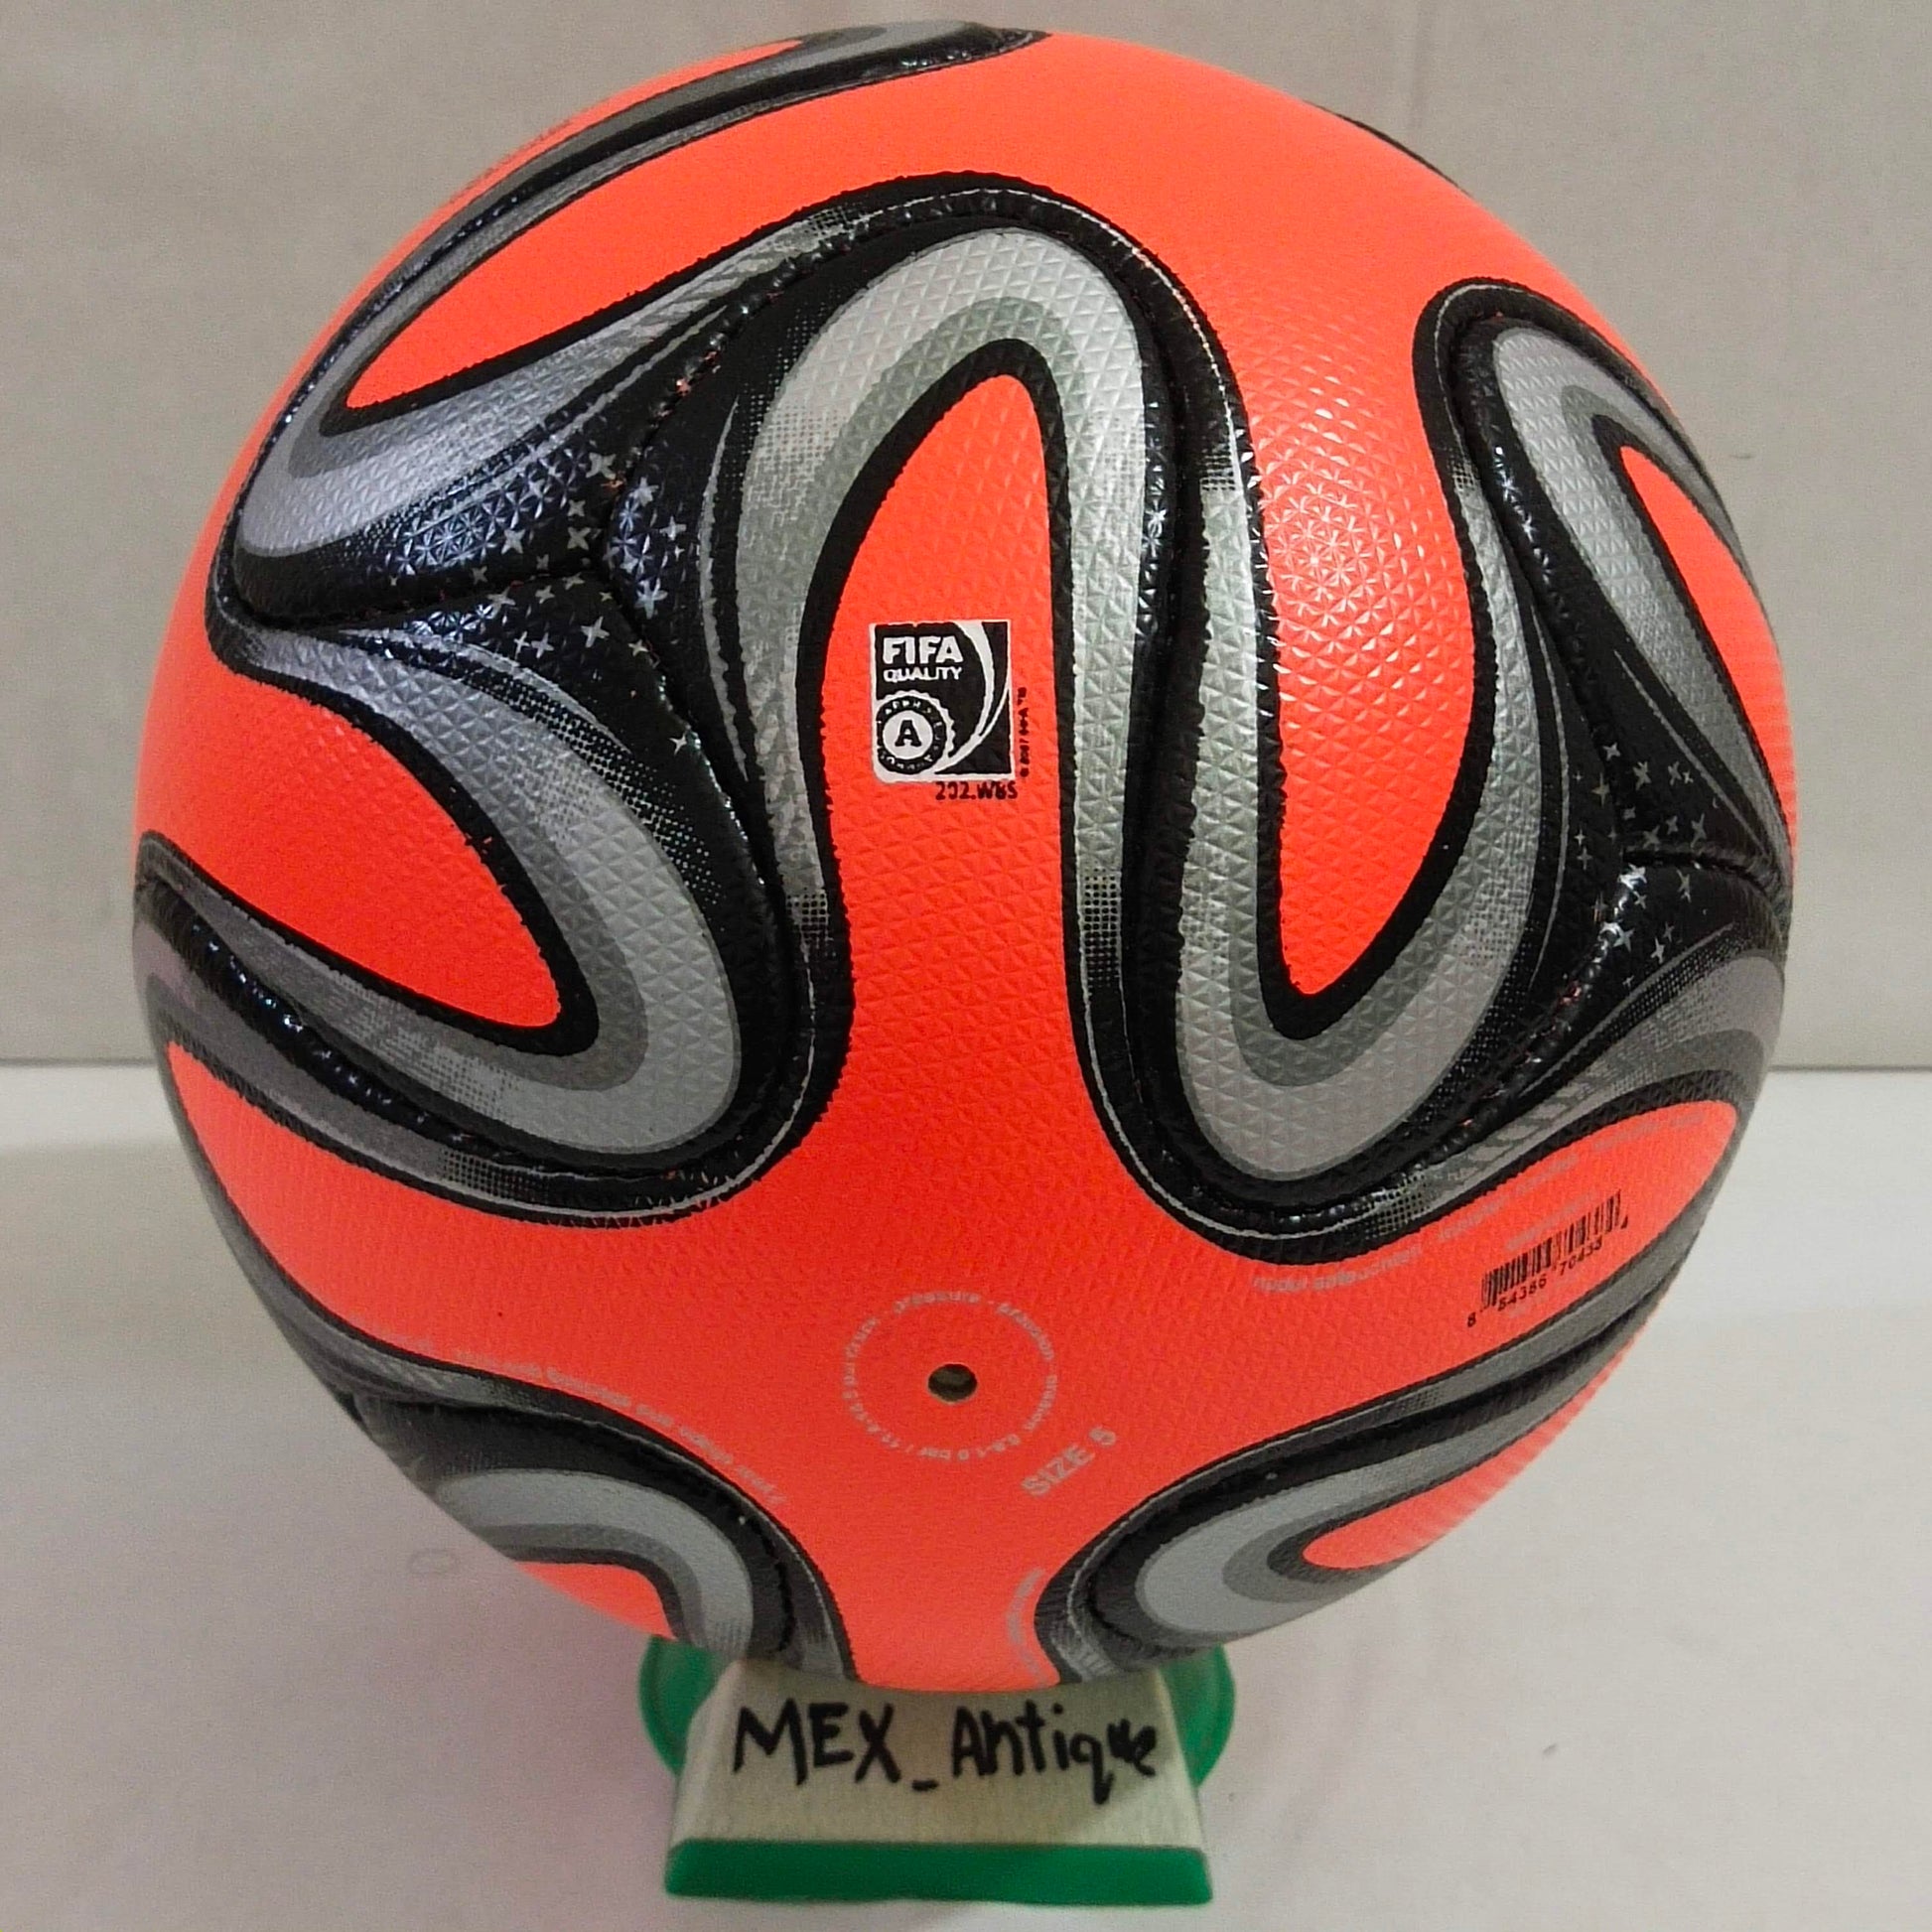 Adidas Brazuca | FIFA World Cup 2014 l OMB Winter Ball | Power Orange | SIZE 5 04